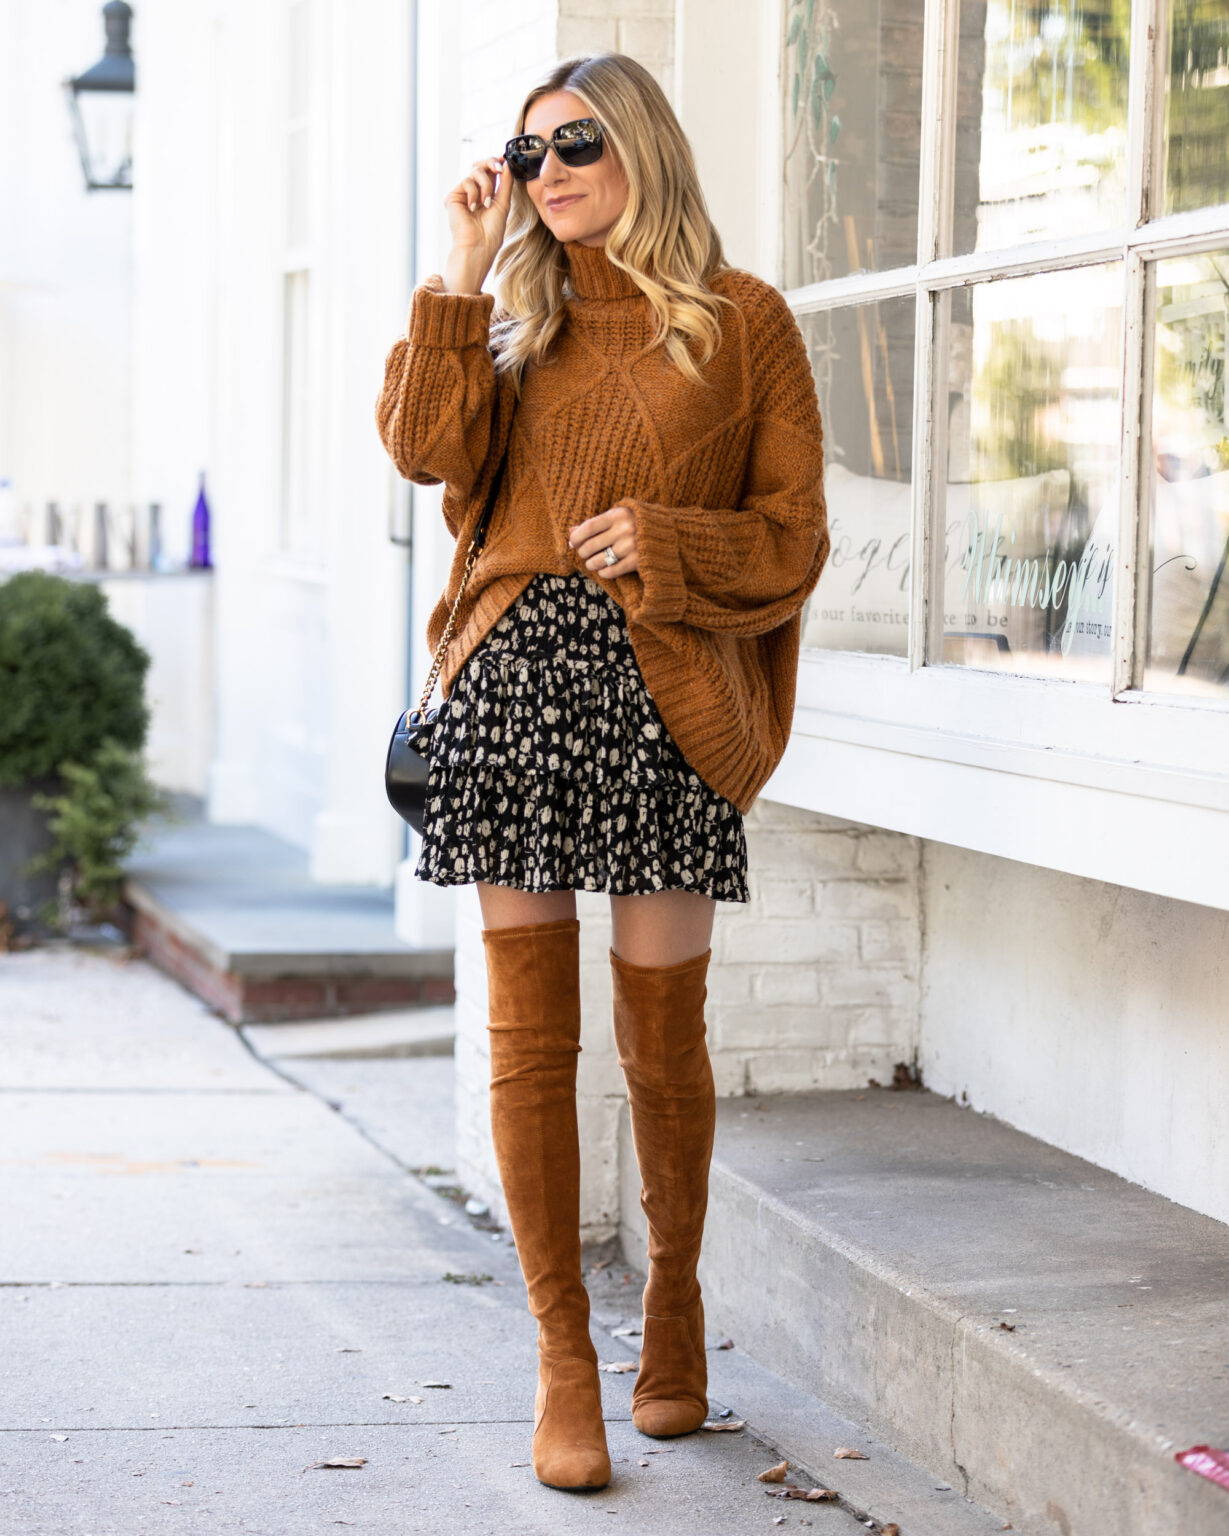 Sweater & Ruffle Skirt - The Glamorous Gal | Everything Fashion